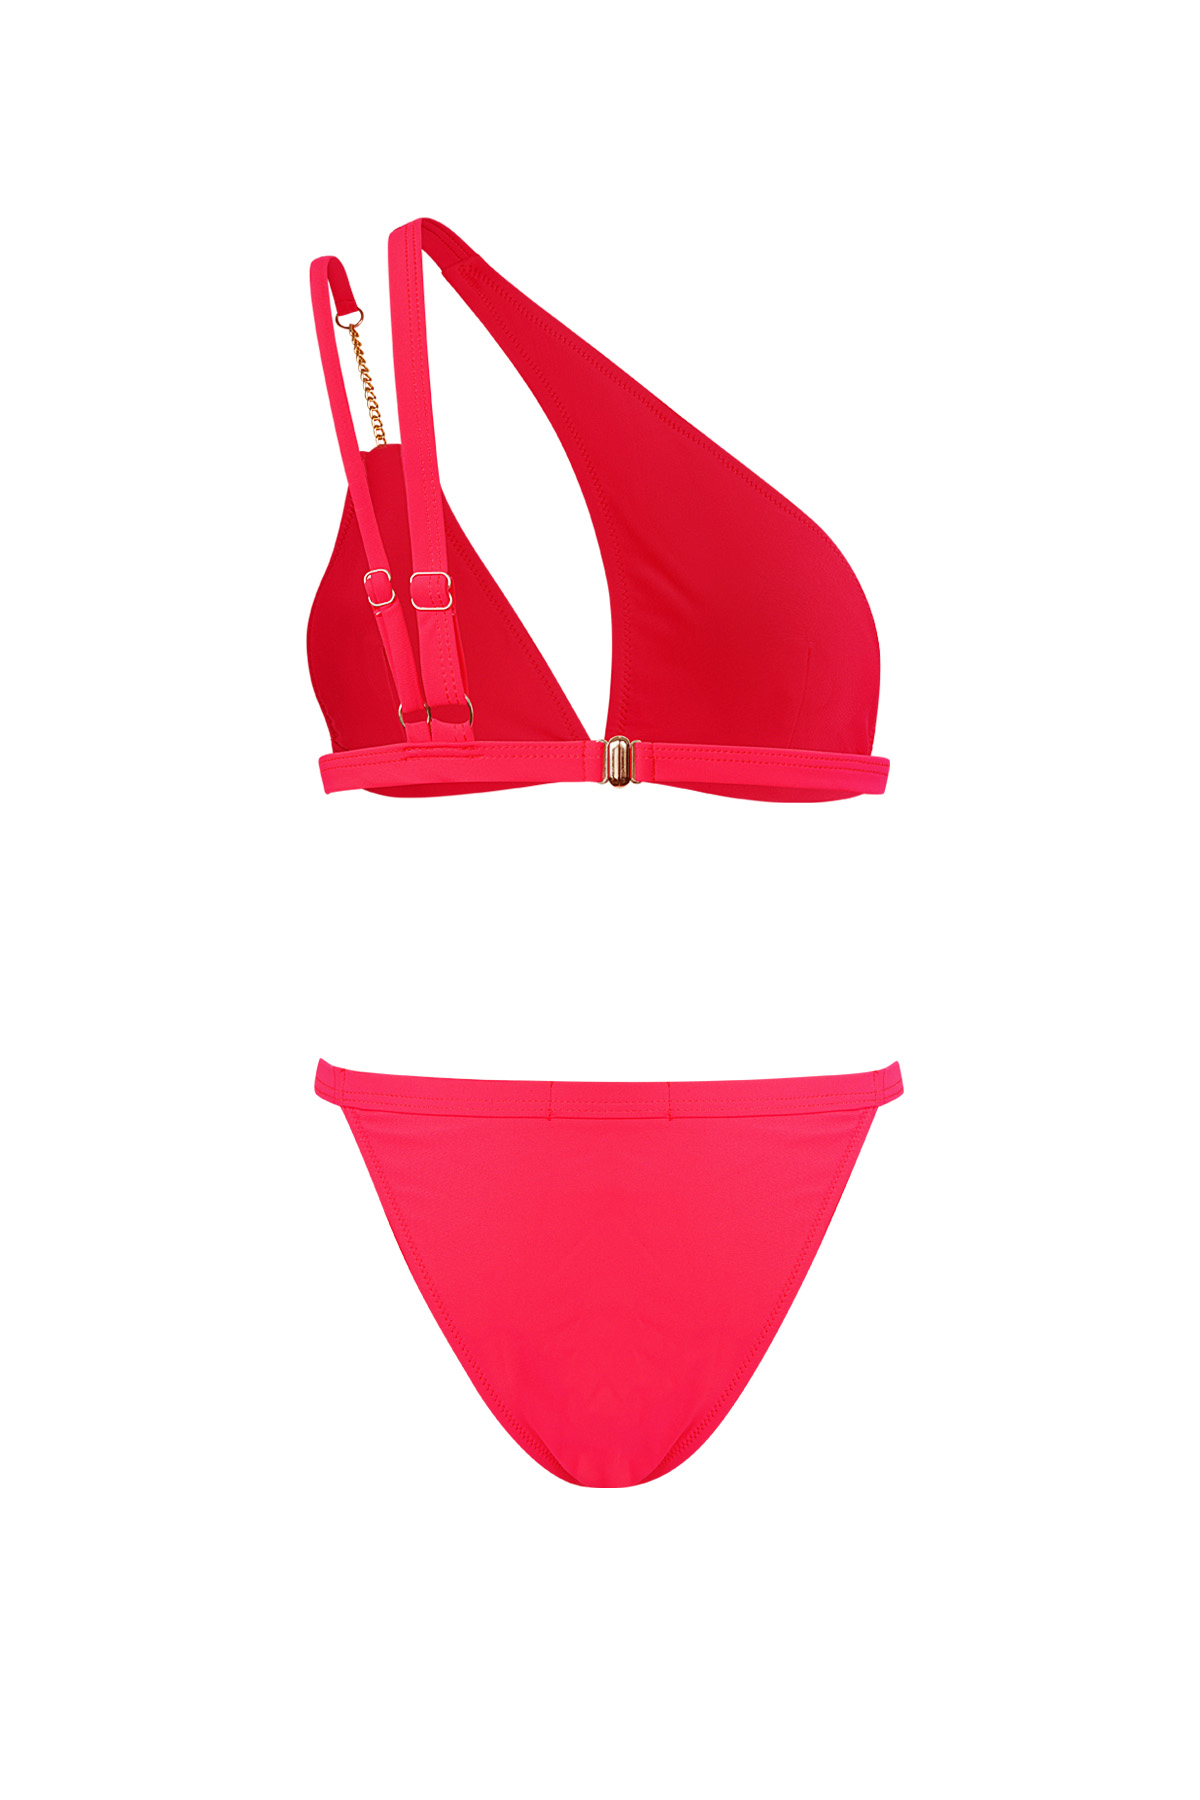 Bikini une épaule - rouge M Image4